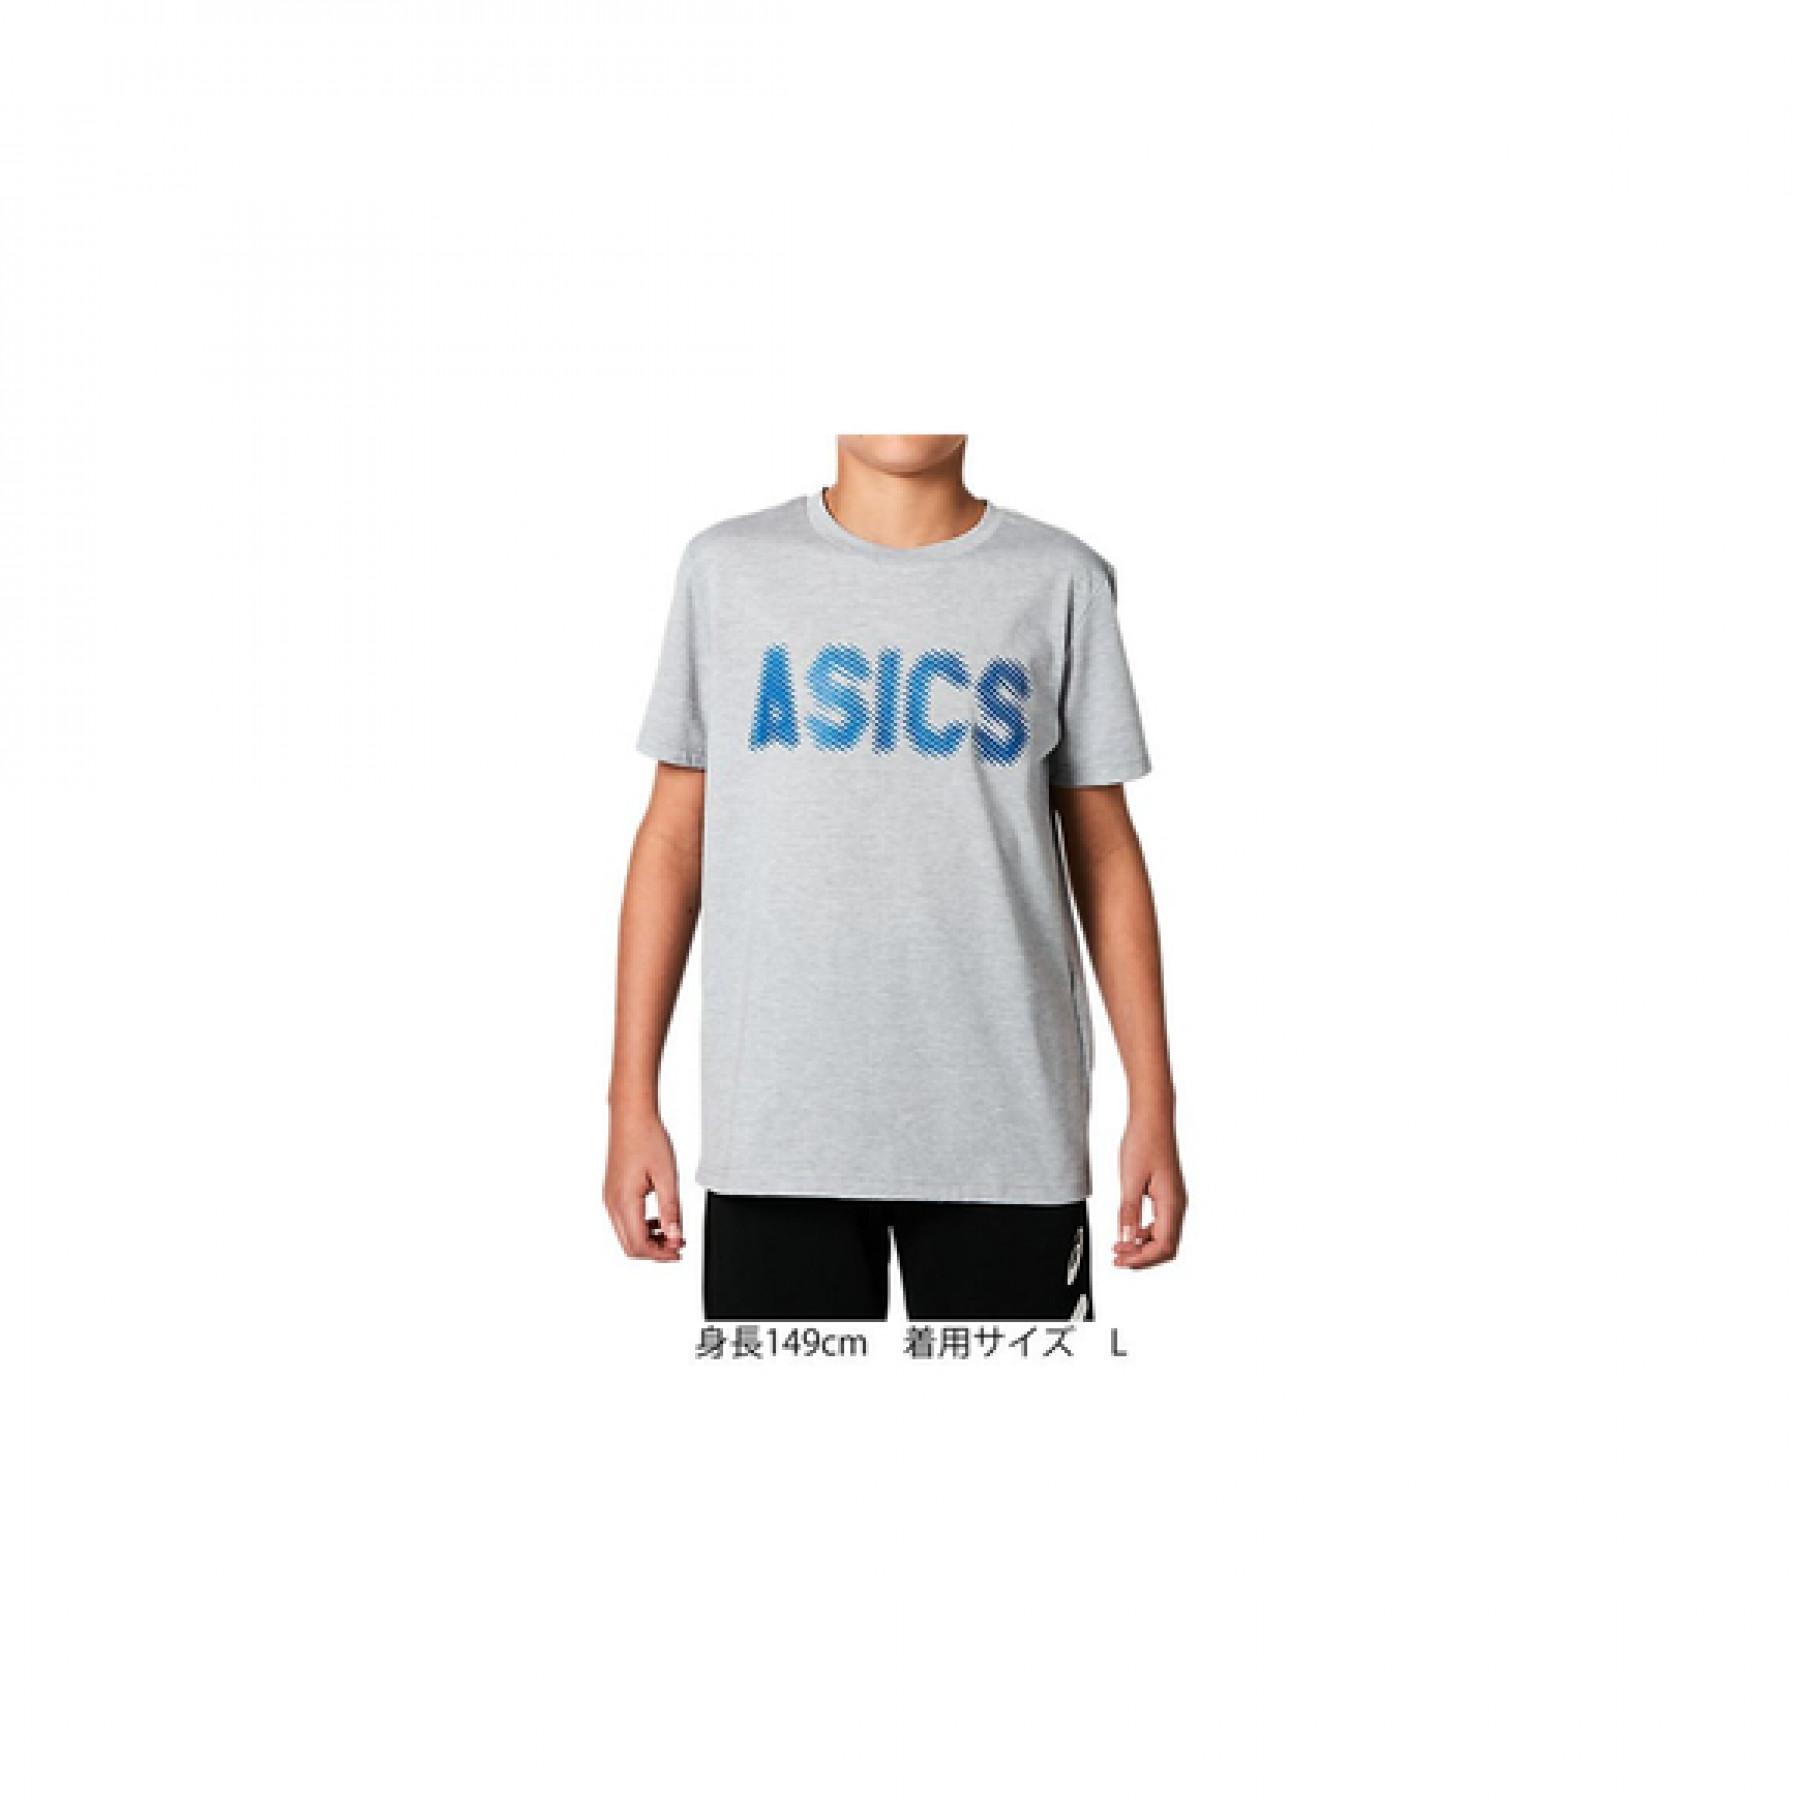 Kinder-T-shirt Asics Gpxt